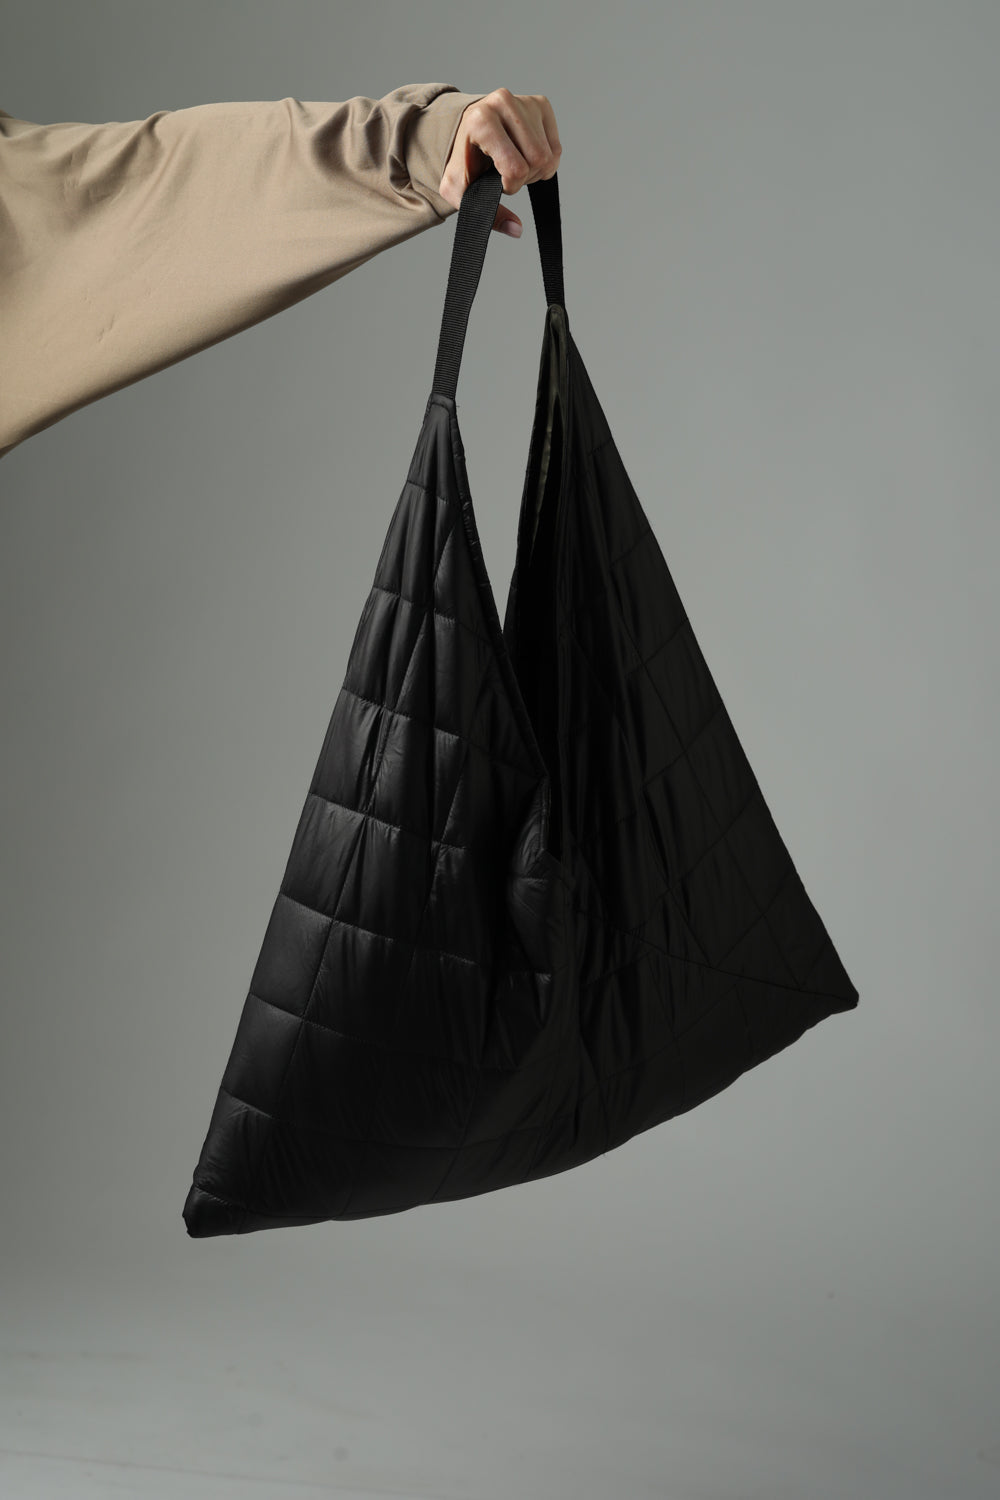 Quilted Black Bag תיק נשים